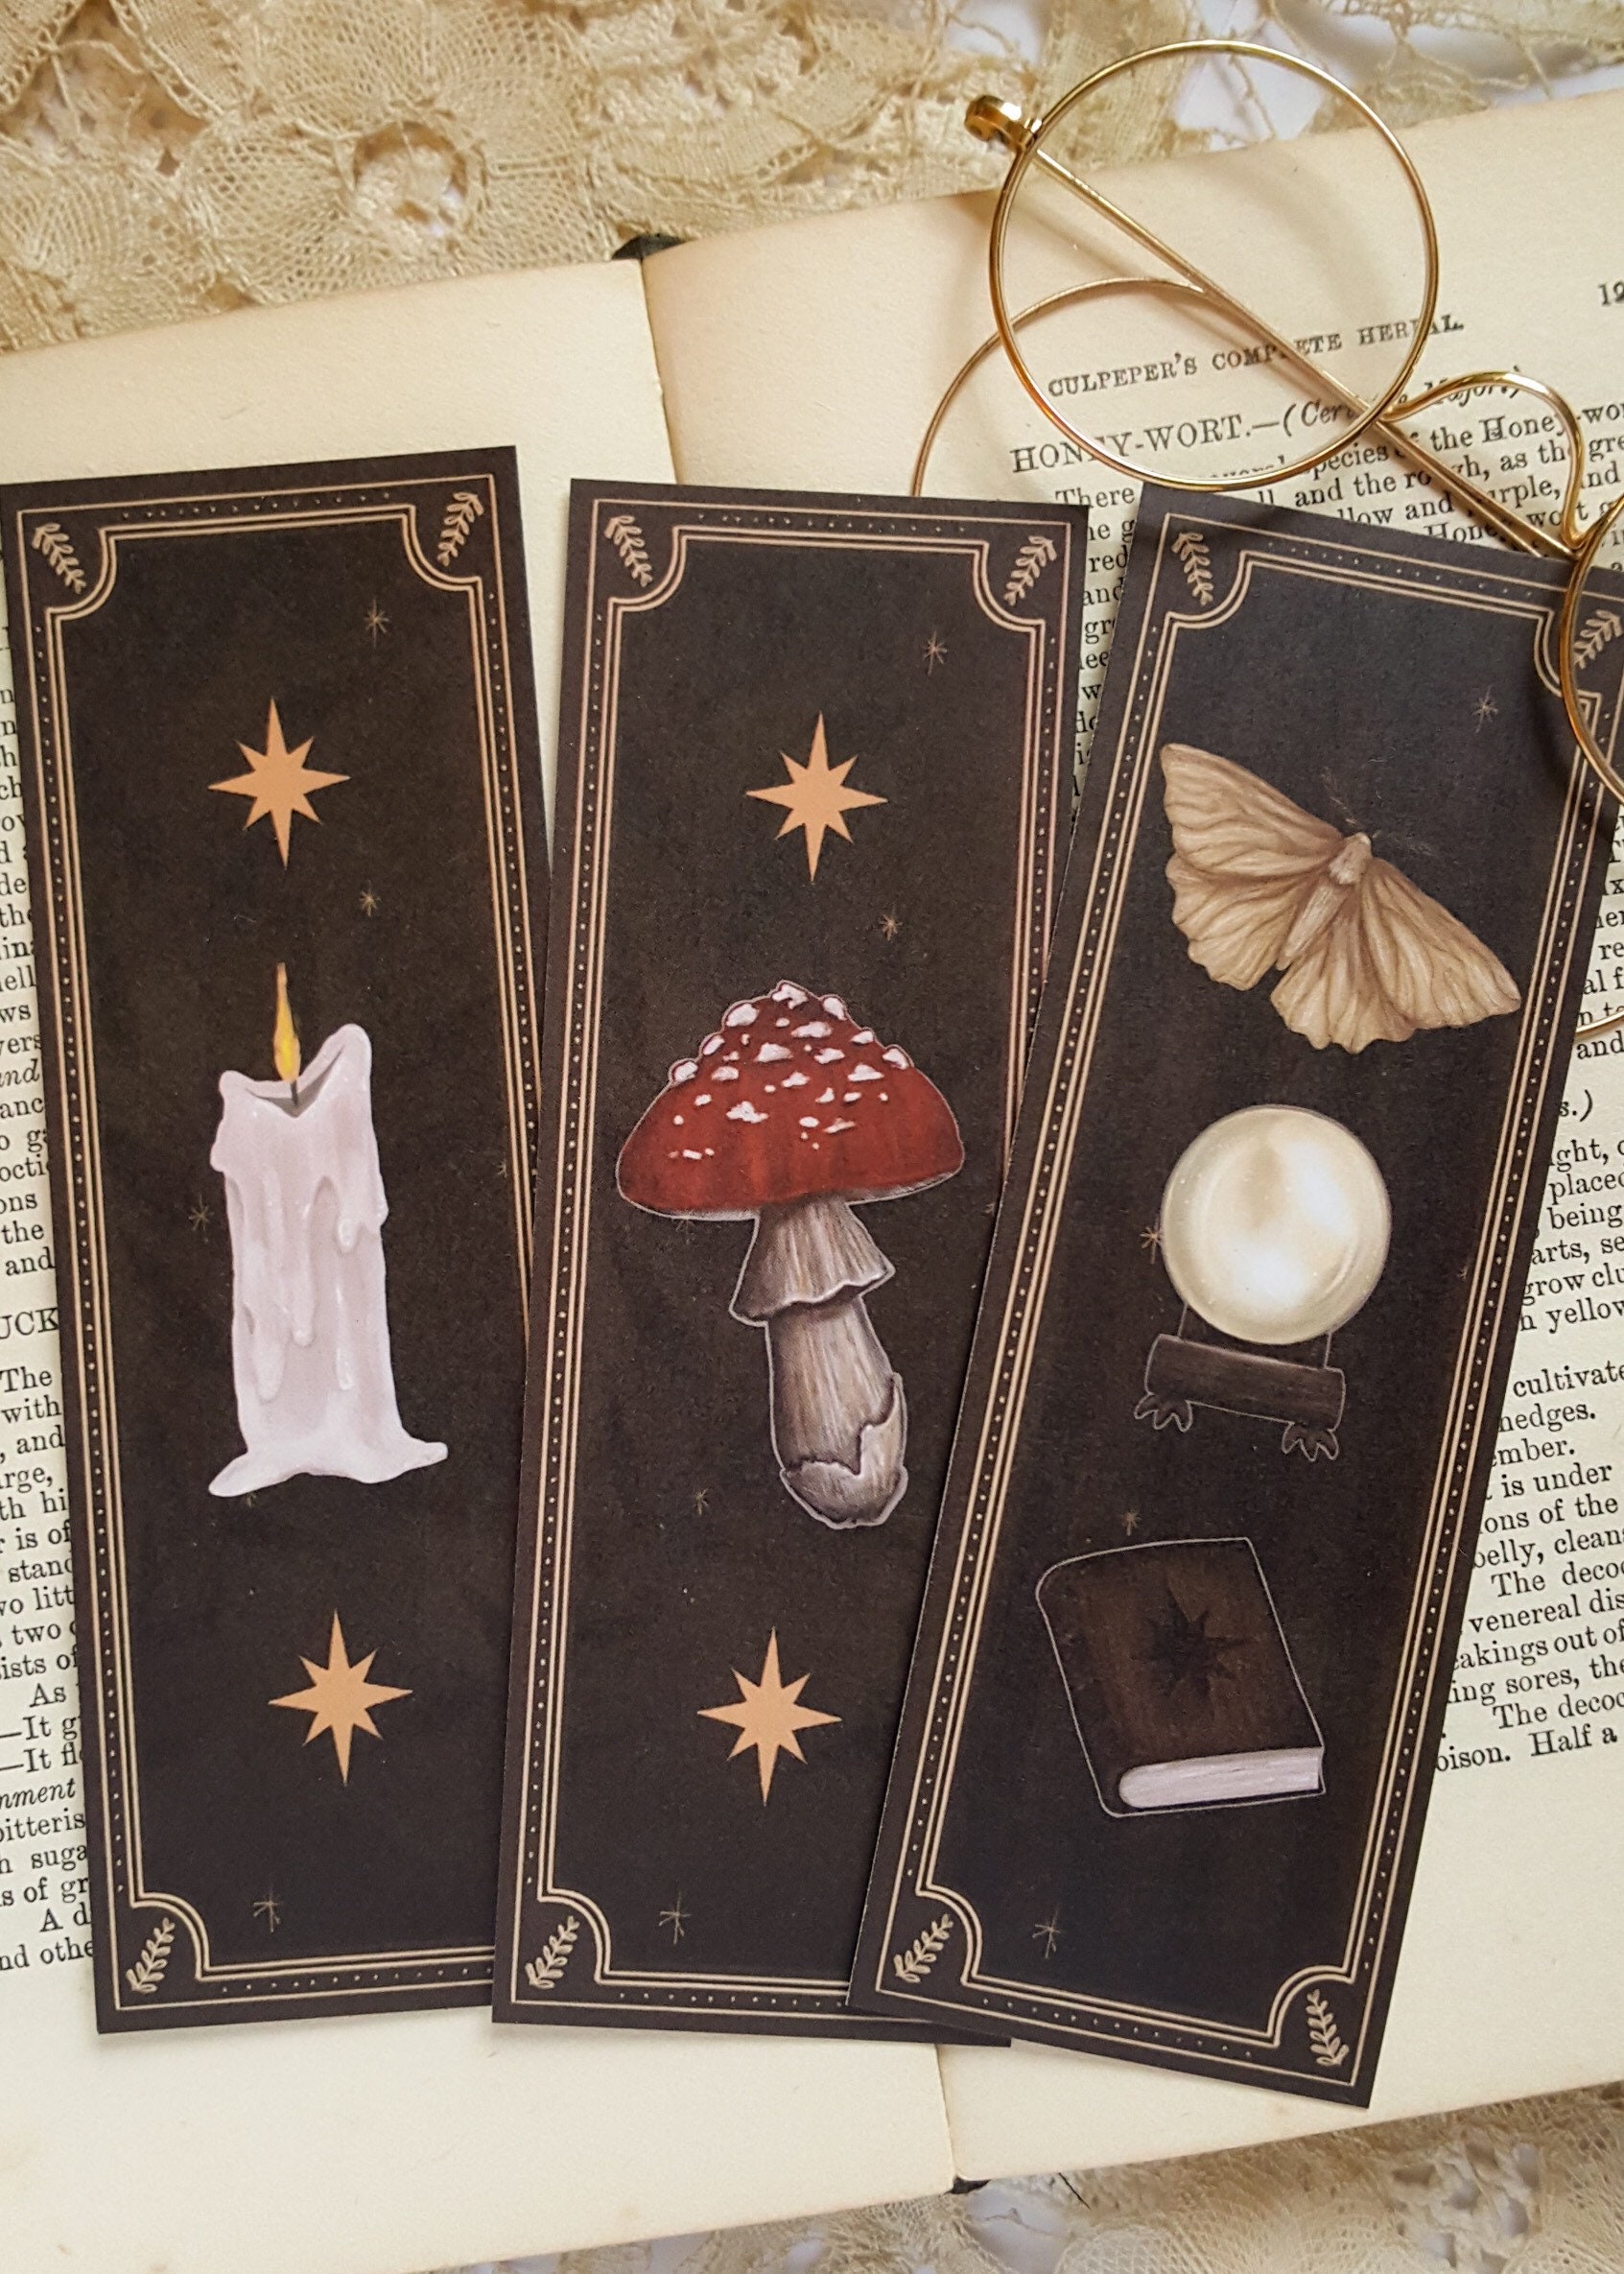 Mushroom bookmark with tassel, retro mushroom bookmark, book lover gift,  cottage core bookmark